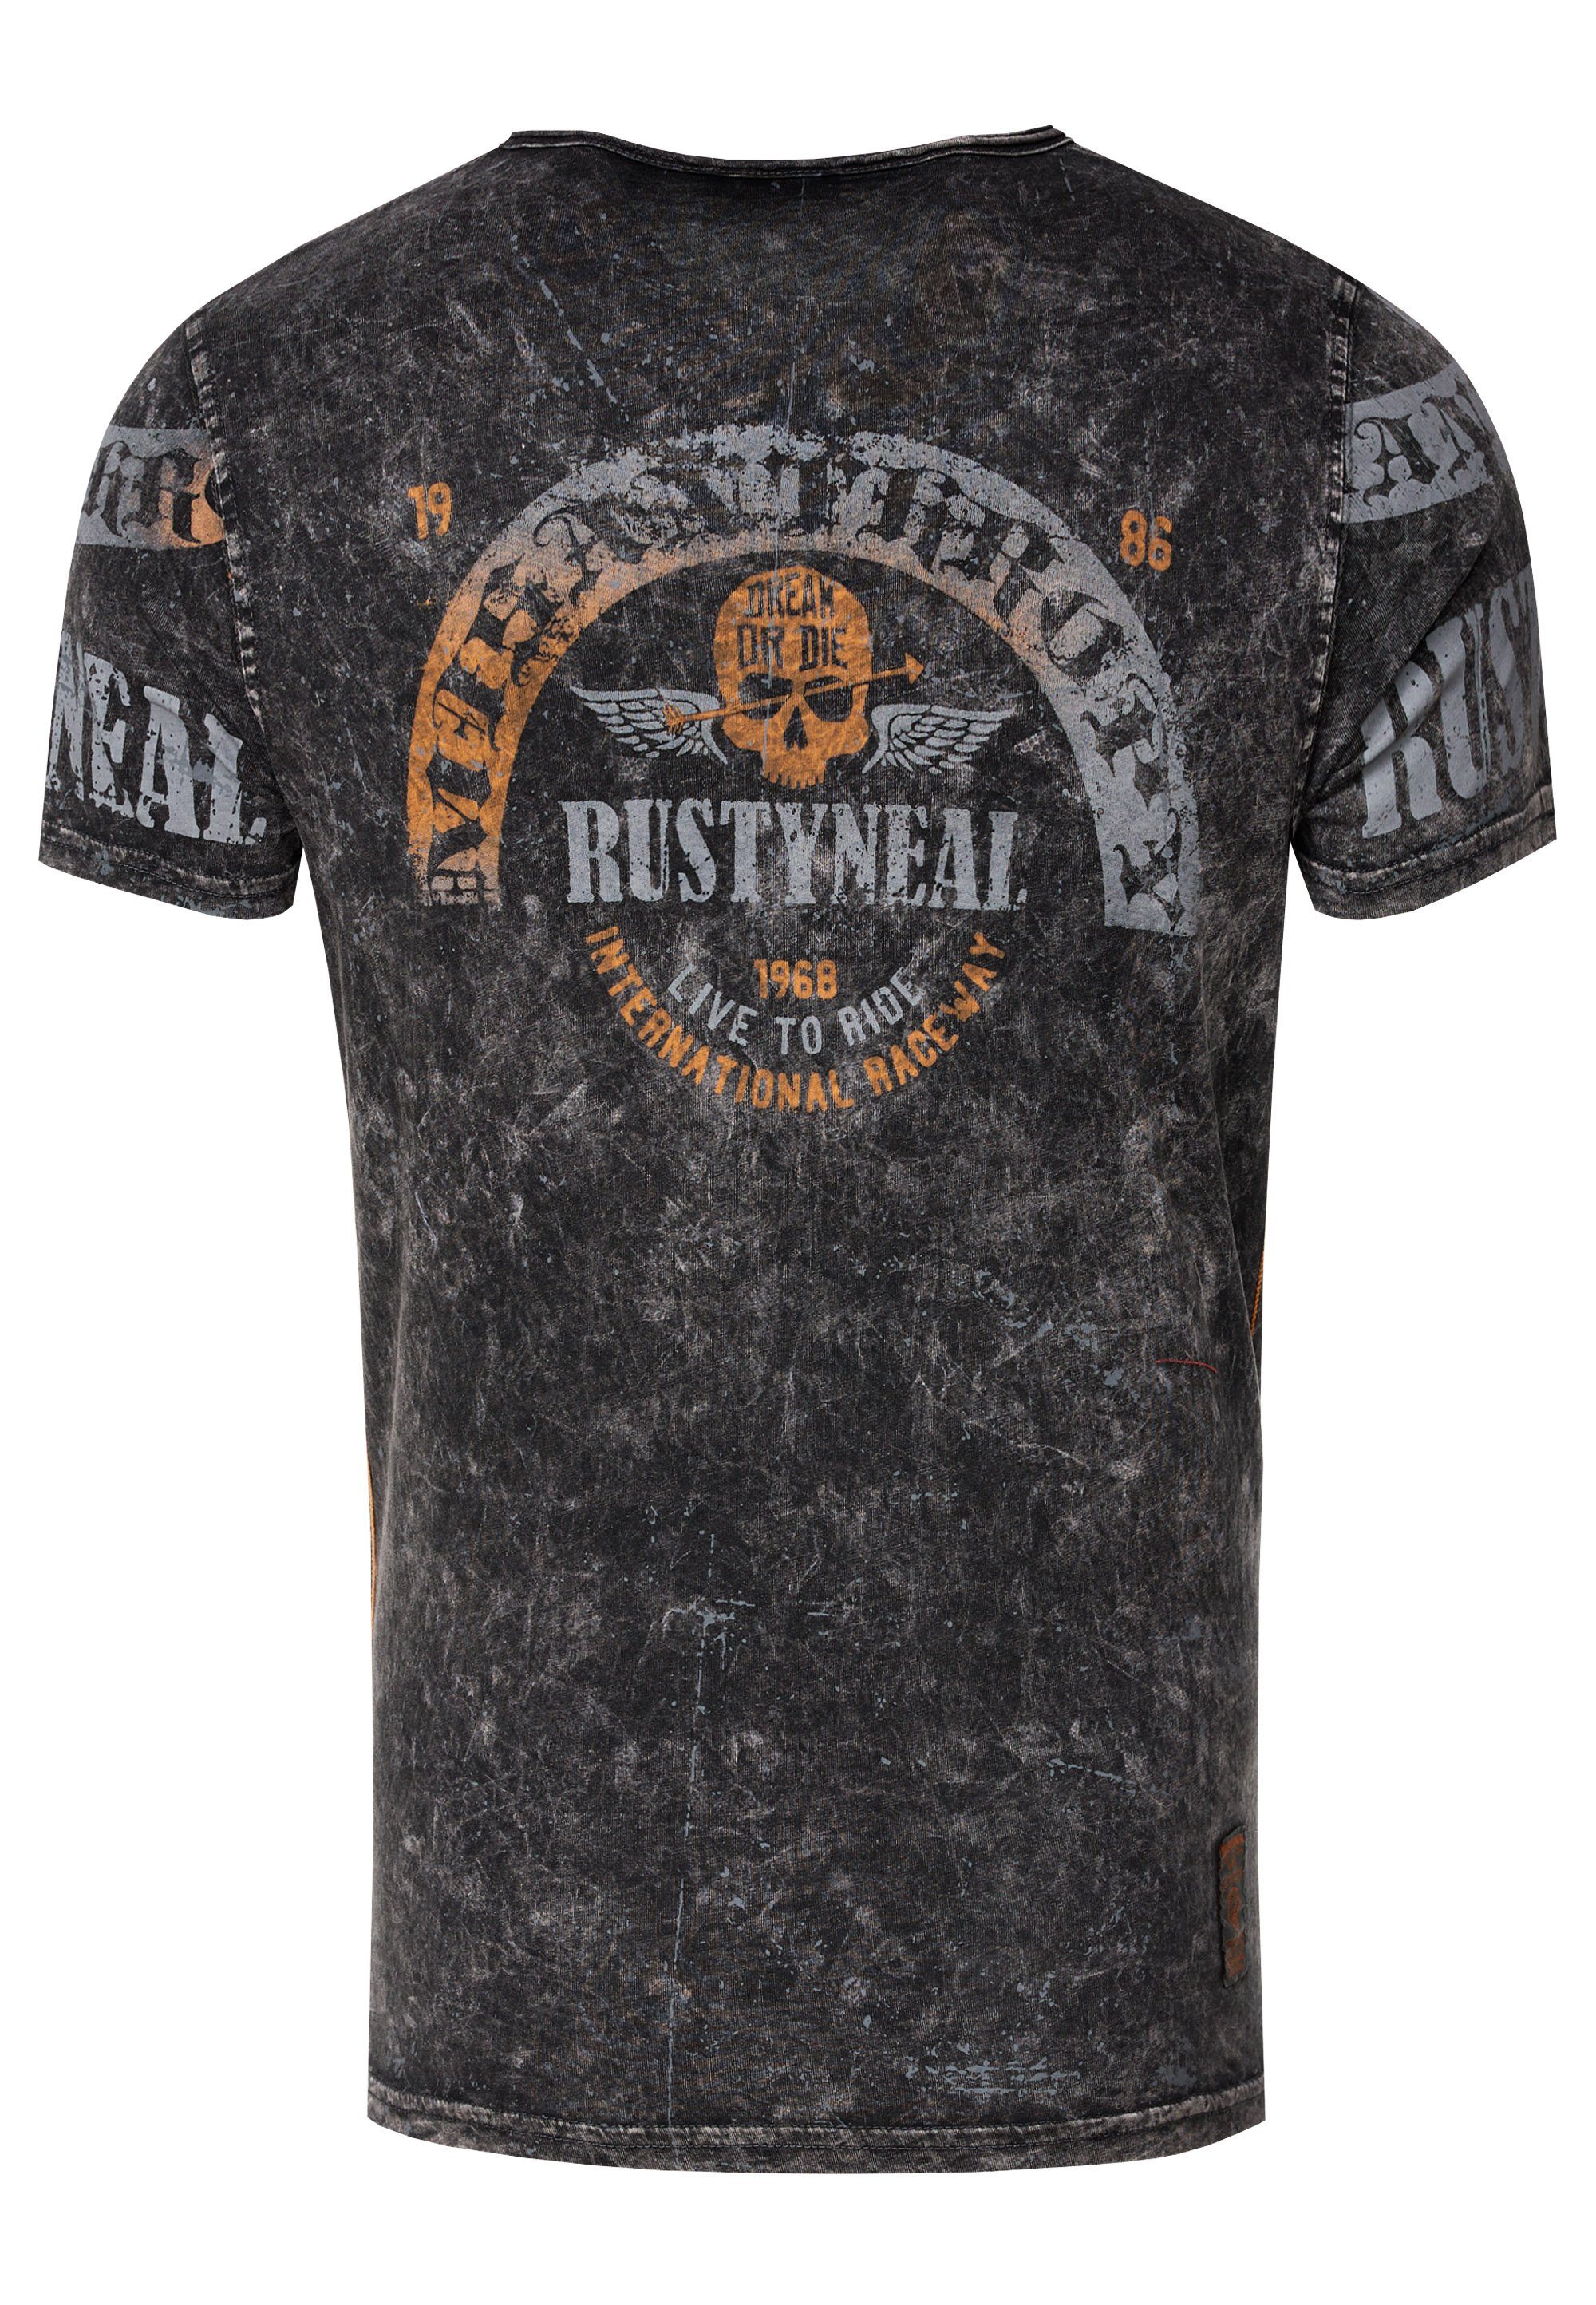 Rusty Neal mit anthrazit T-Shirt Markenprint